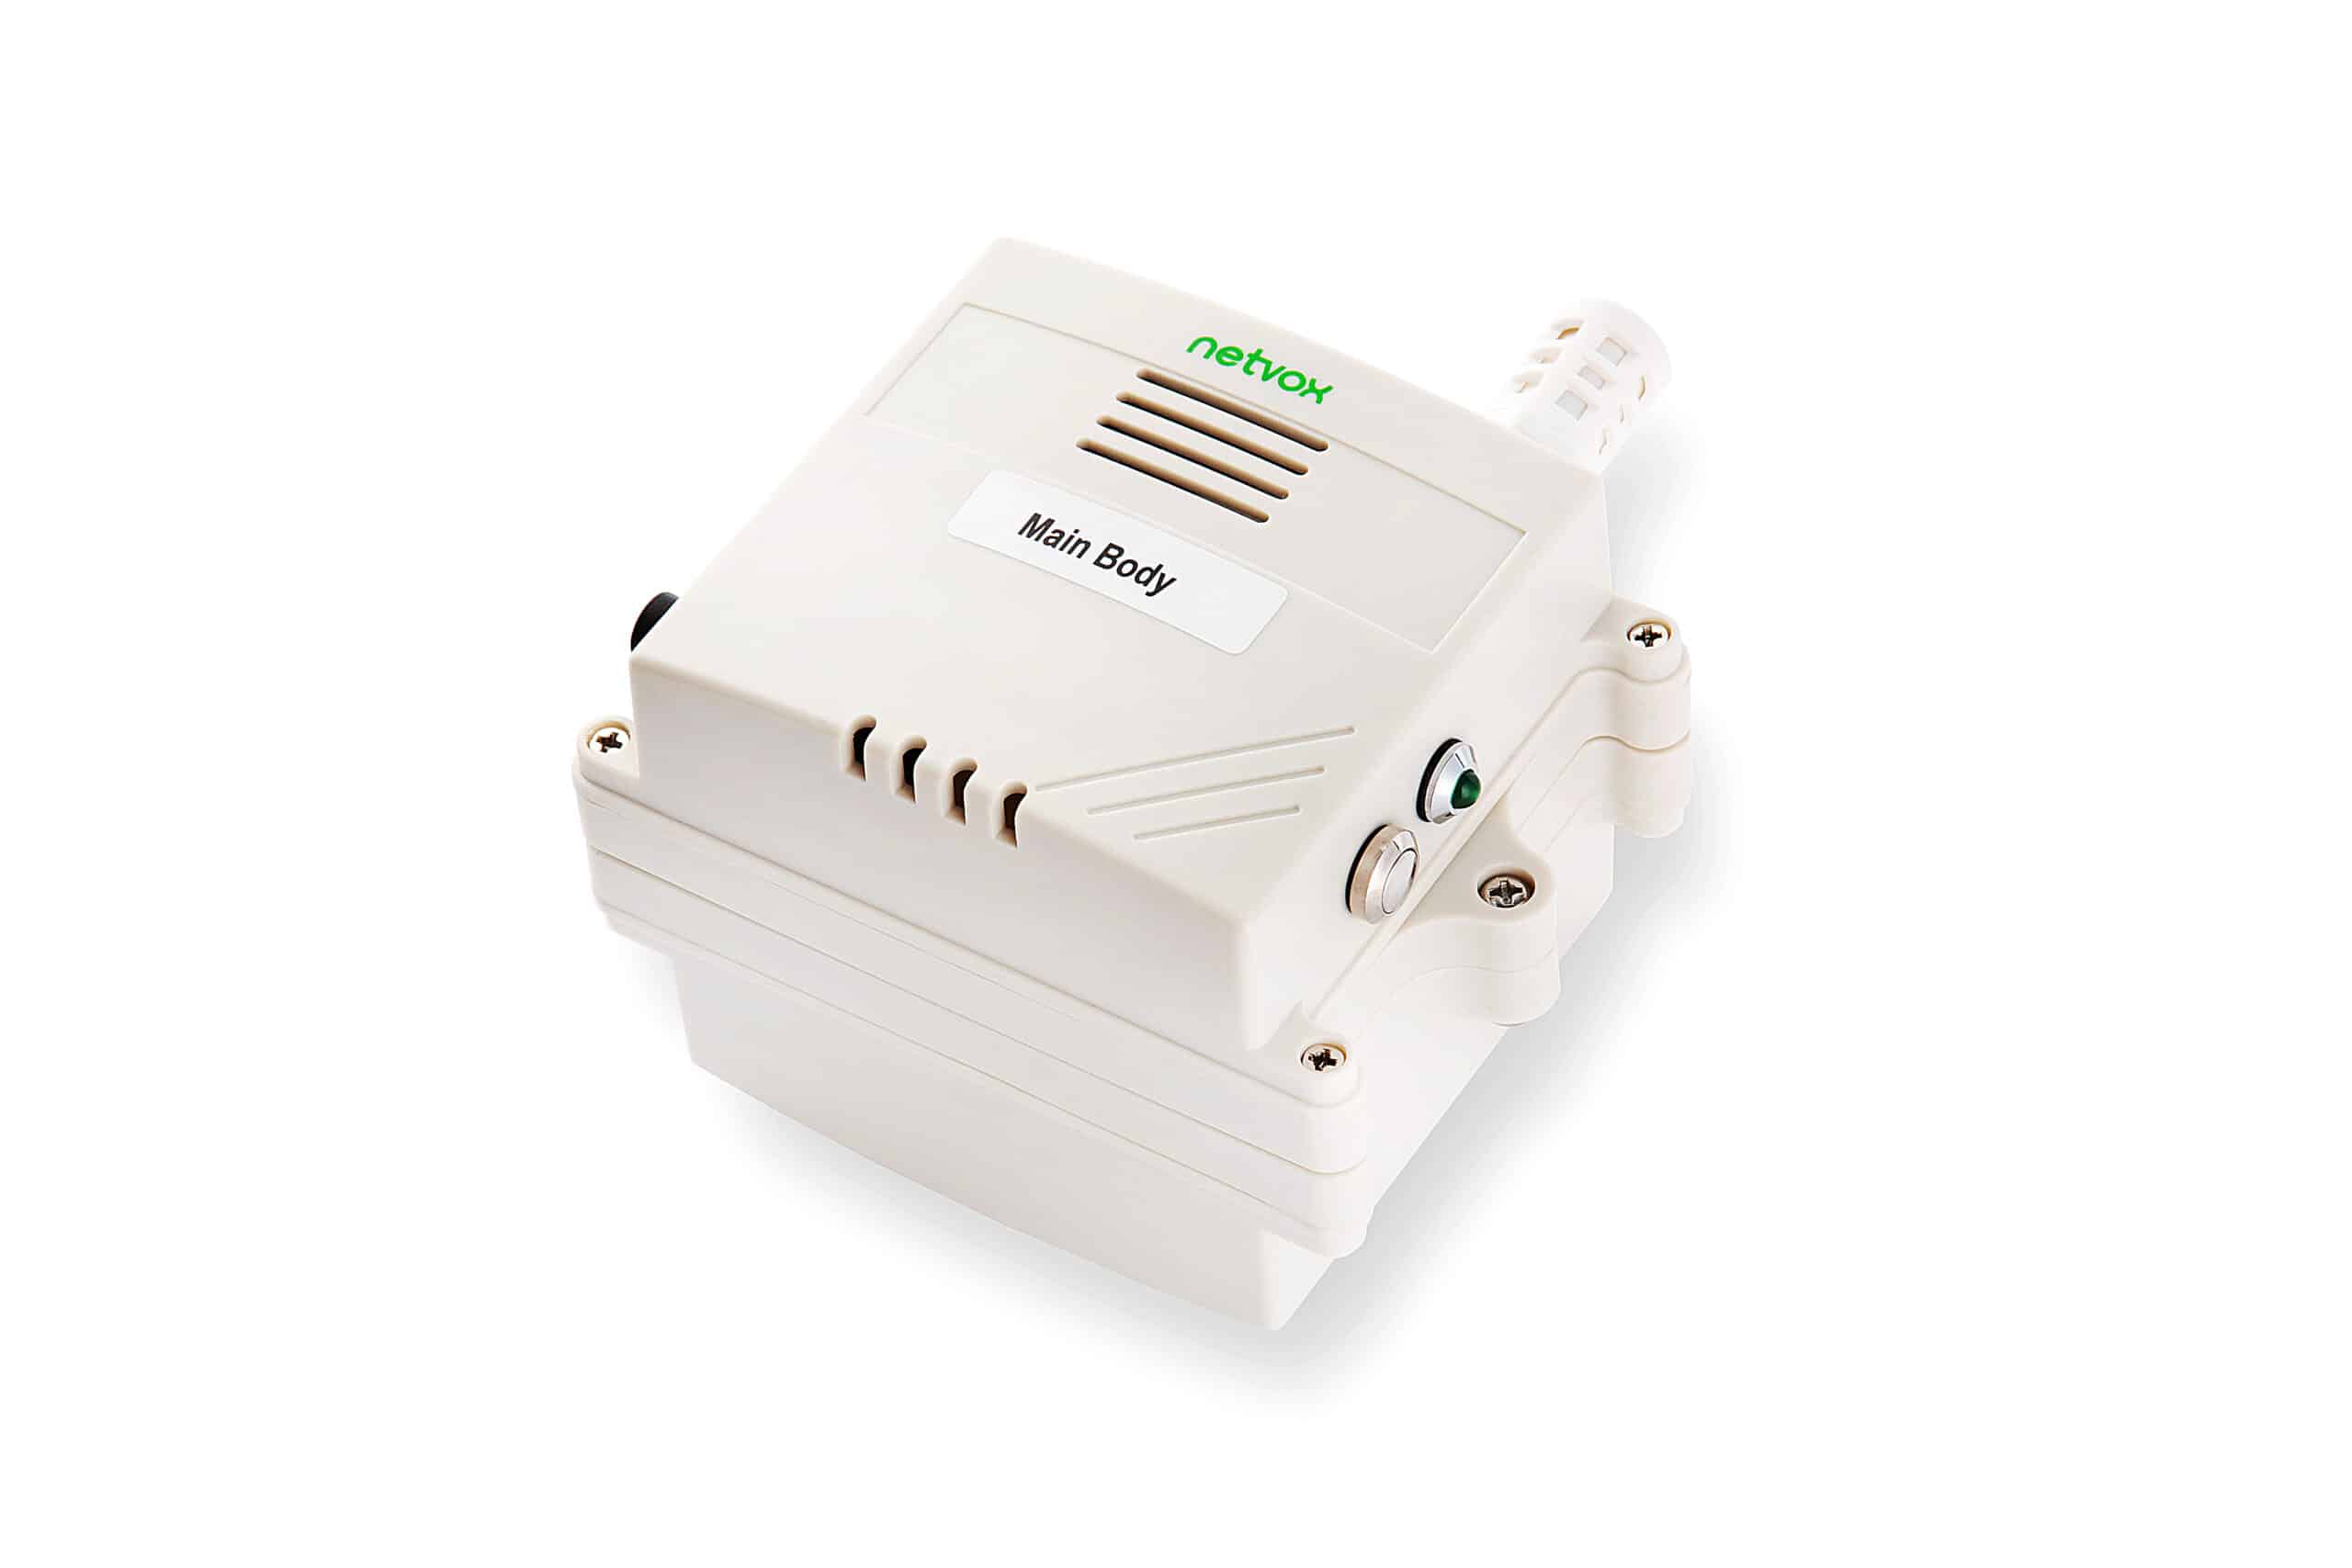 Netvox R72616A - Wireless PM2.5, Temperature, Humidity Sensor